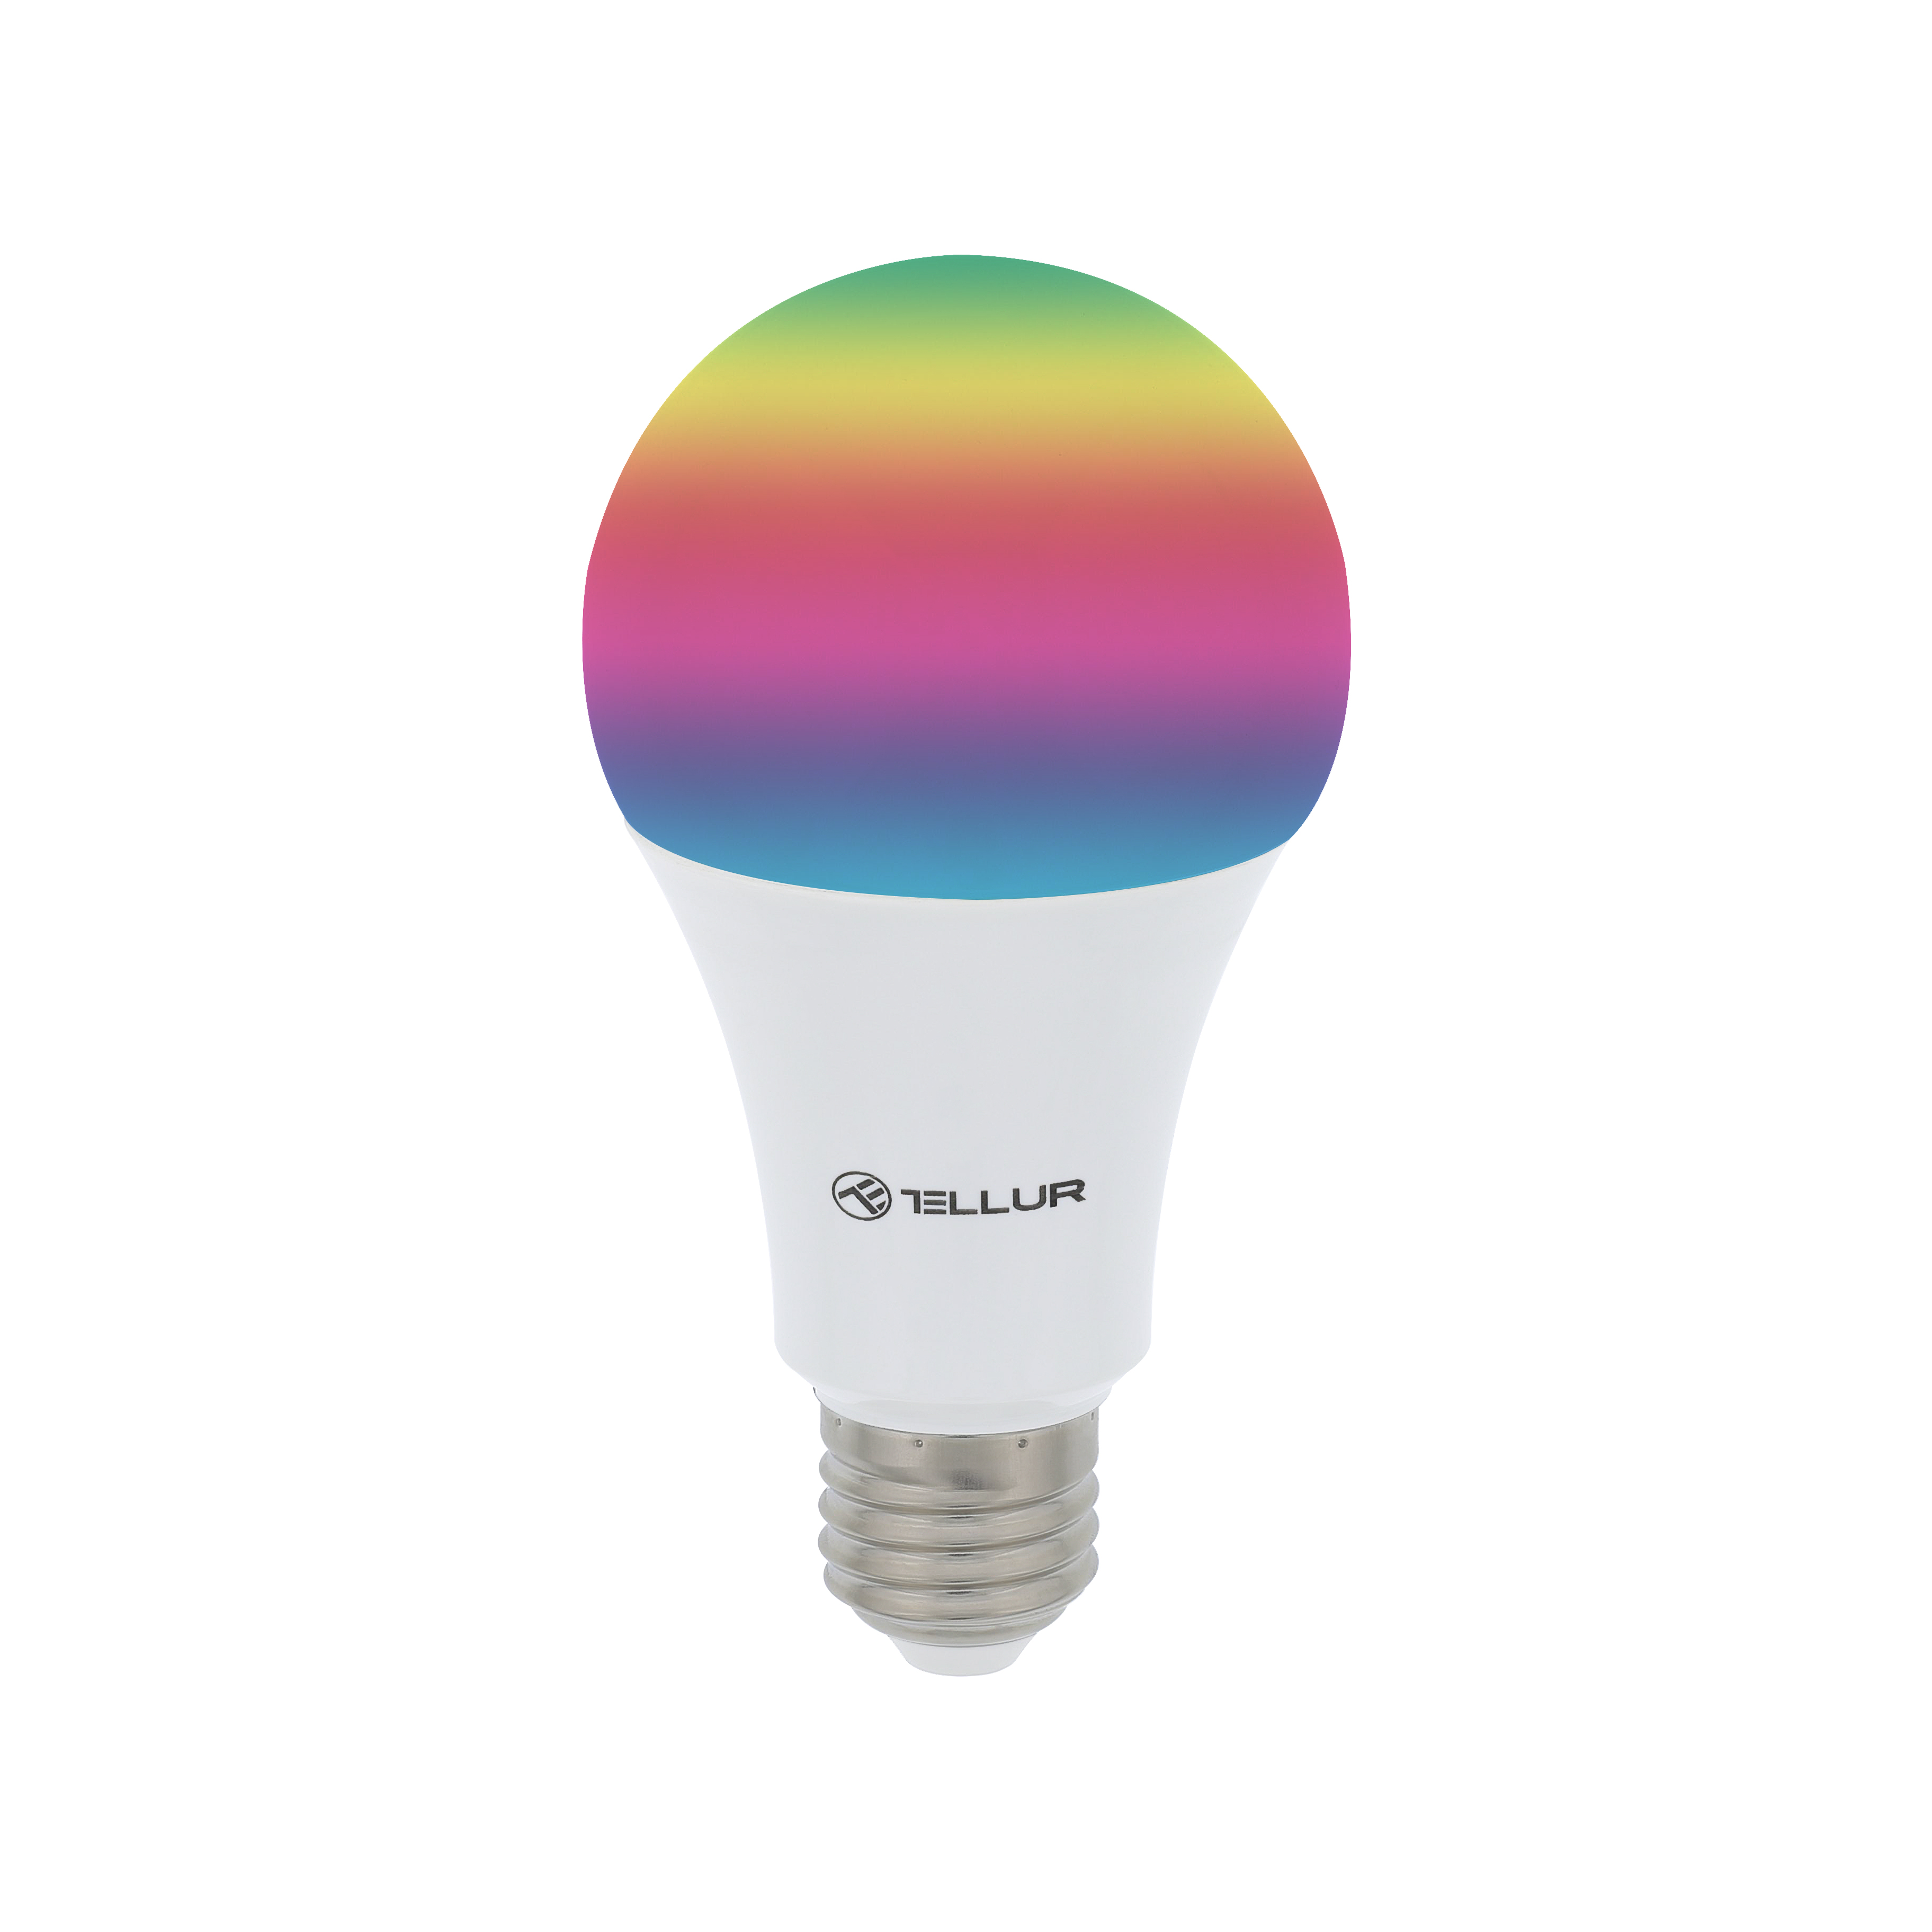 Smarte Warm, Weiß, 10W, dimmbar Glühbirne RGB E27, WiFi TELLUR